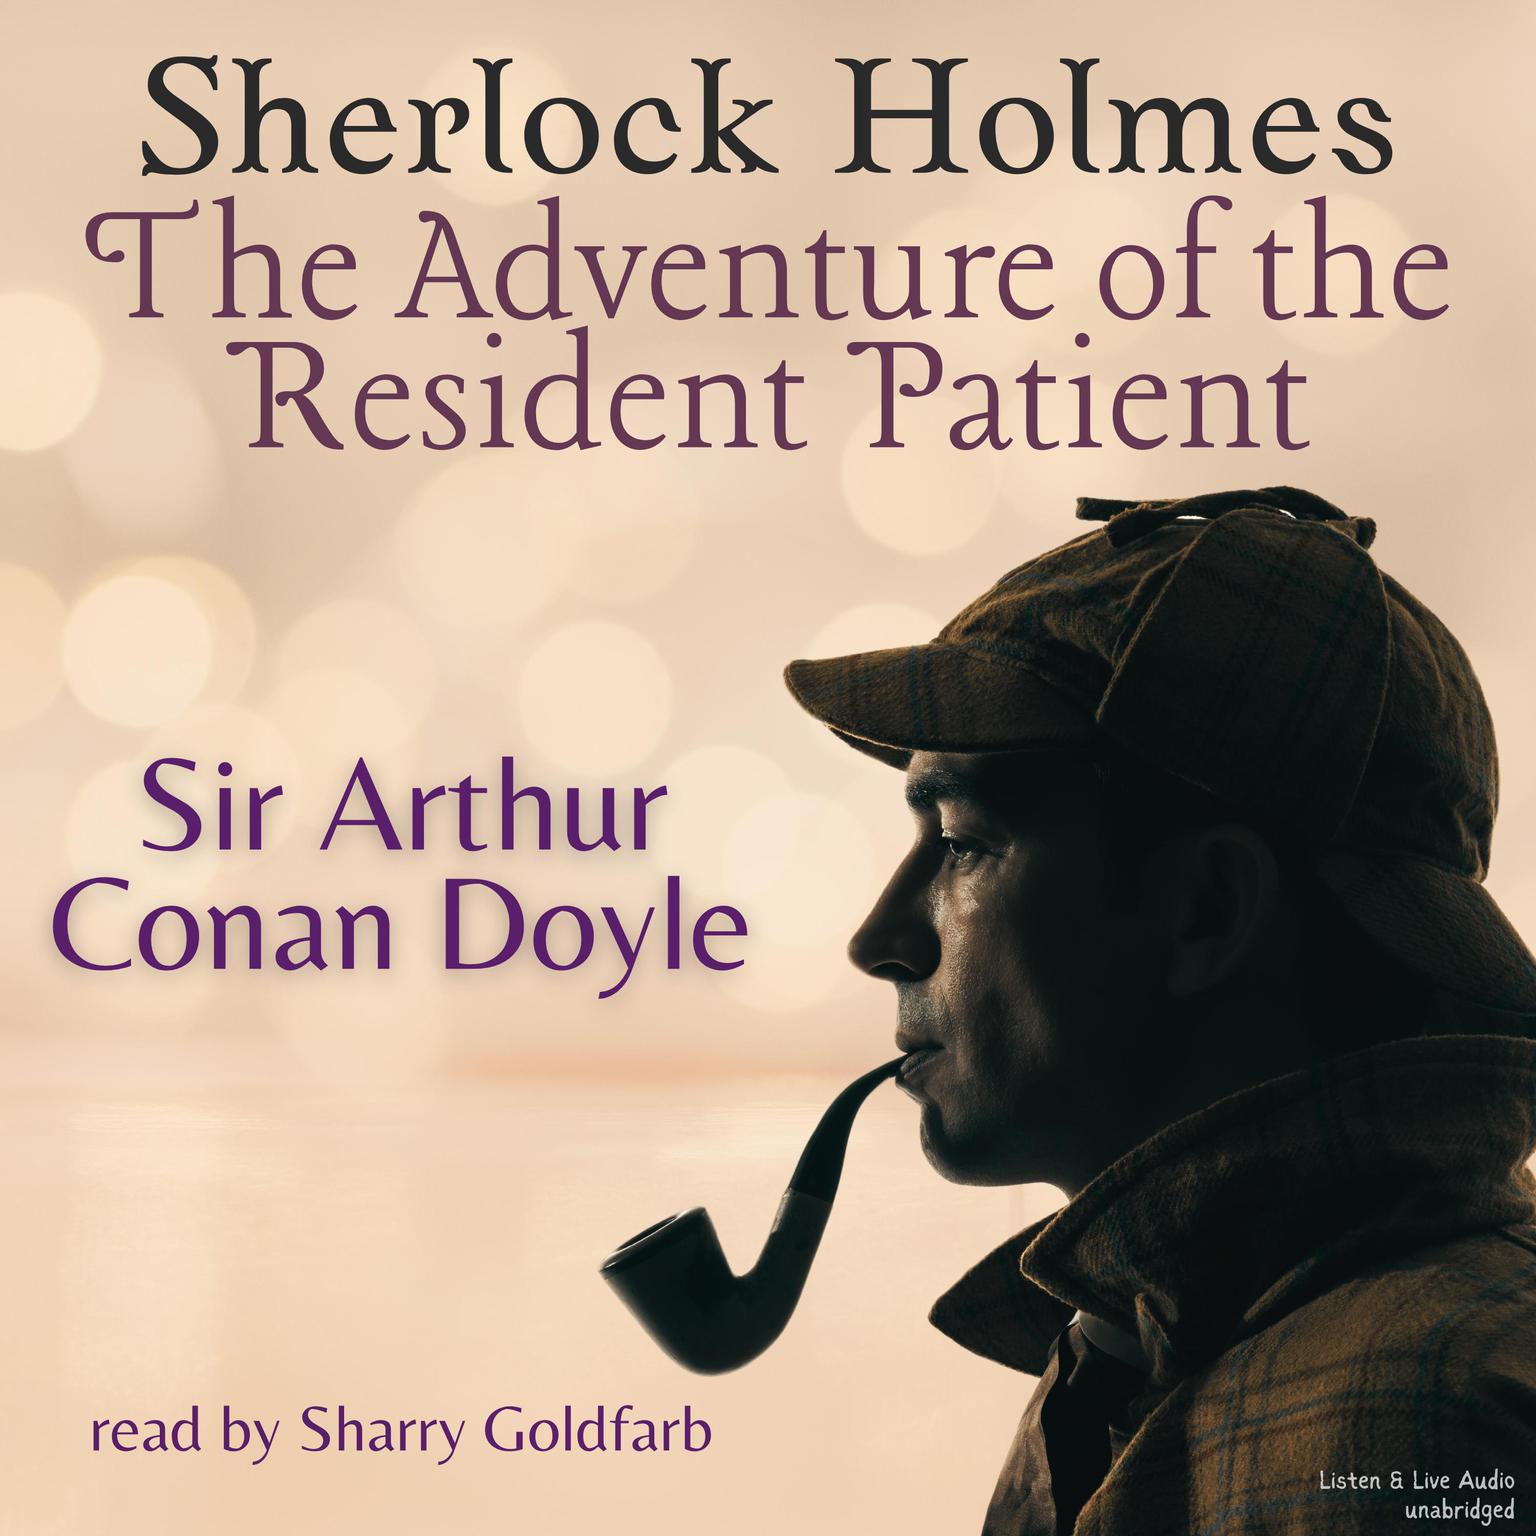 Sherlock Holmes: The Adventure of the Resident Patient: The Adventure of the Resident Patient Audiobook, by Arthur Conan Doyle